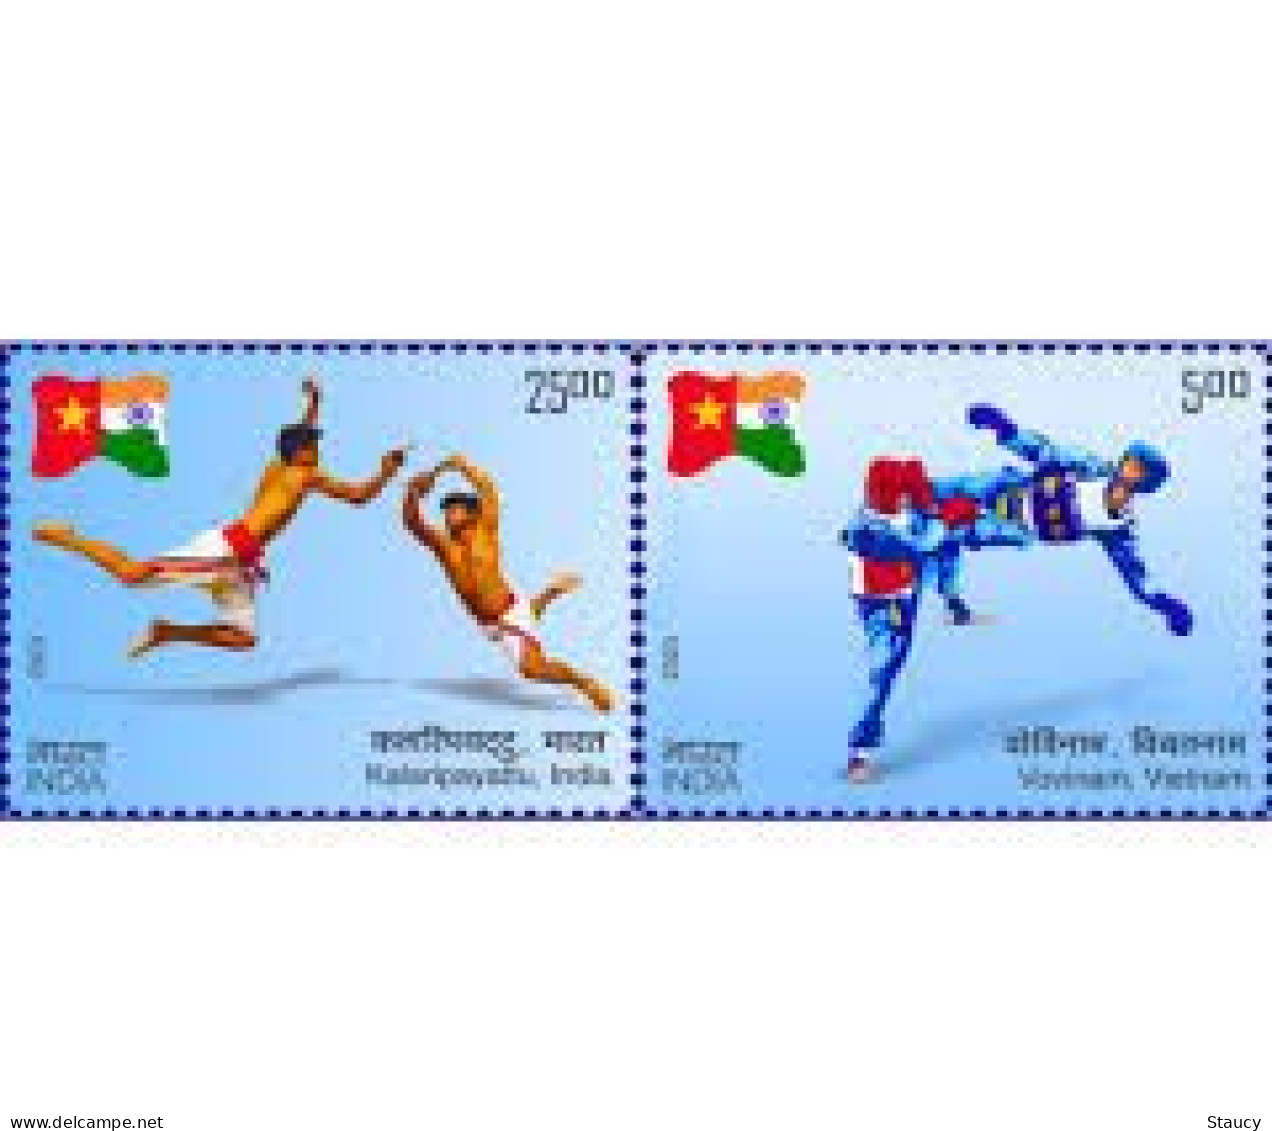 India 2023 India – Vietnam Joint Issue Collection: 2v SET + Miniature Sheet + First Day Cover As Per Scan - Gemeinschaftsausgaben